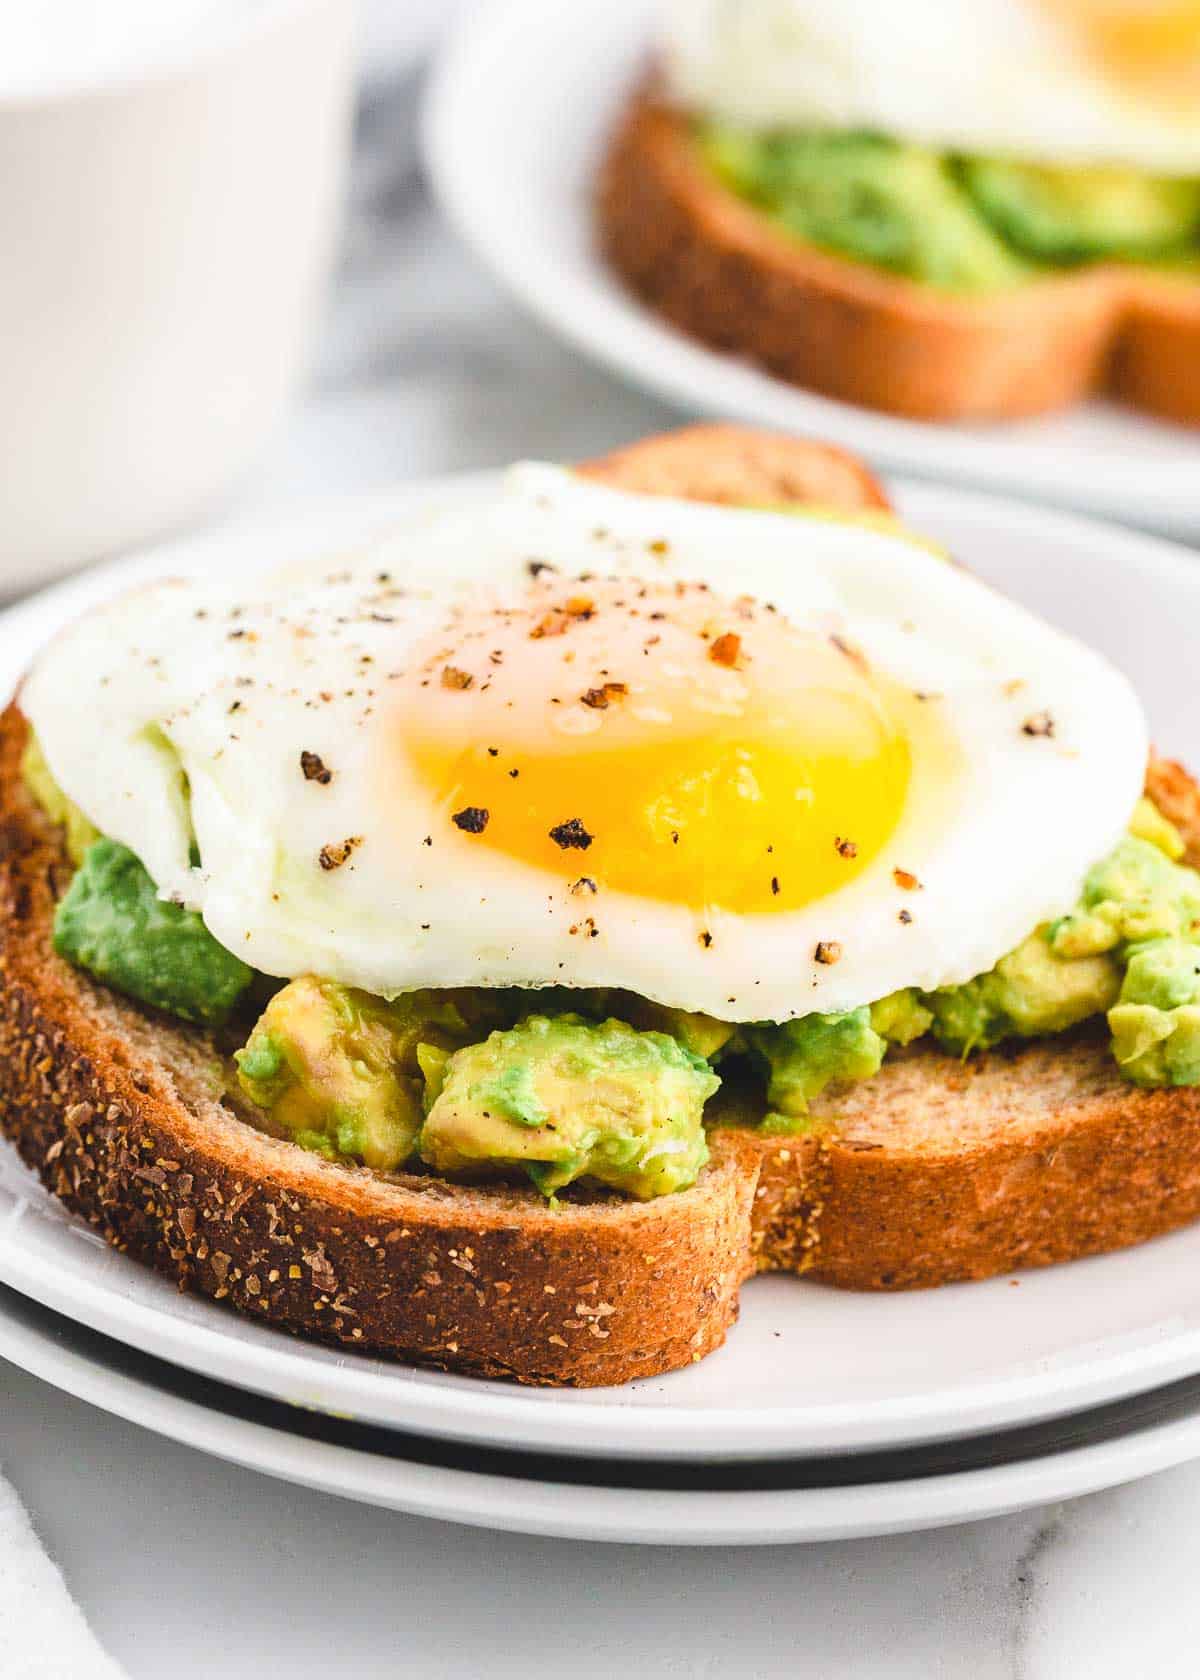 Sunny side up eggs on avocado toast.